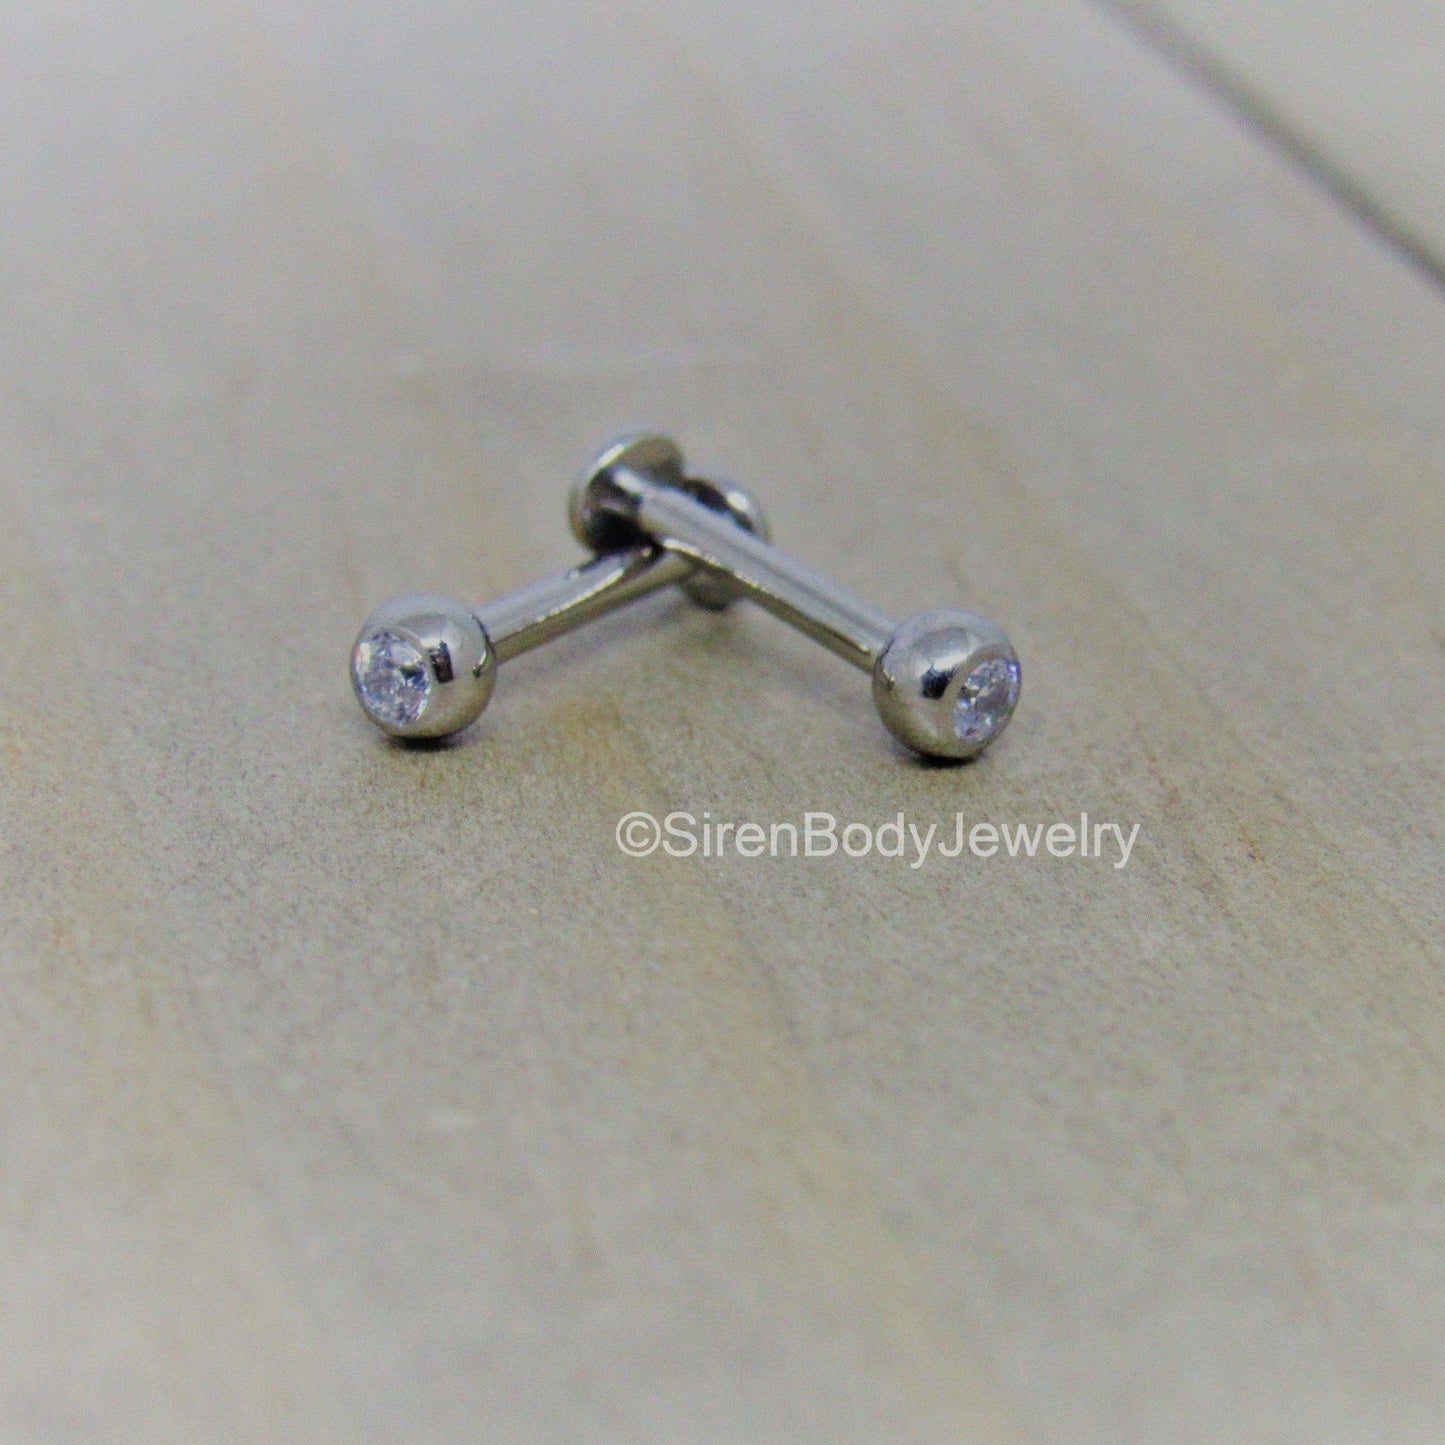 16g Titanium flat back labret stud 5/16" 3mm gem bead internally threaded earlobe helix conch tragus earring - SirenBodyJewelry